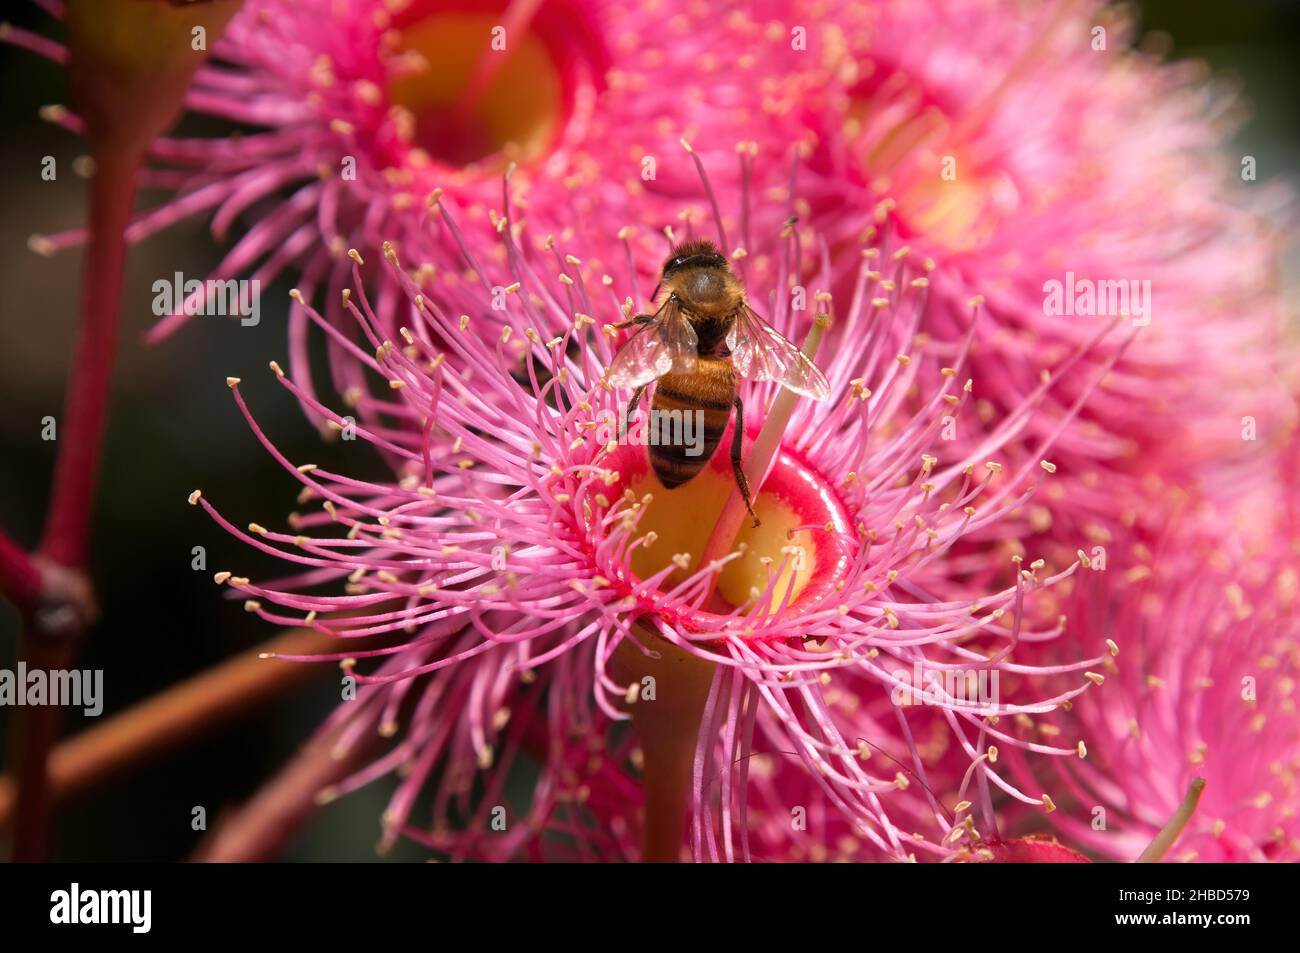 Sydney Australia, bee on pink flower of an Australian native flowering gum tree Stock Photo